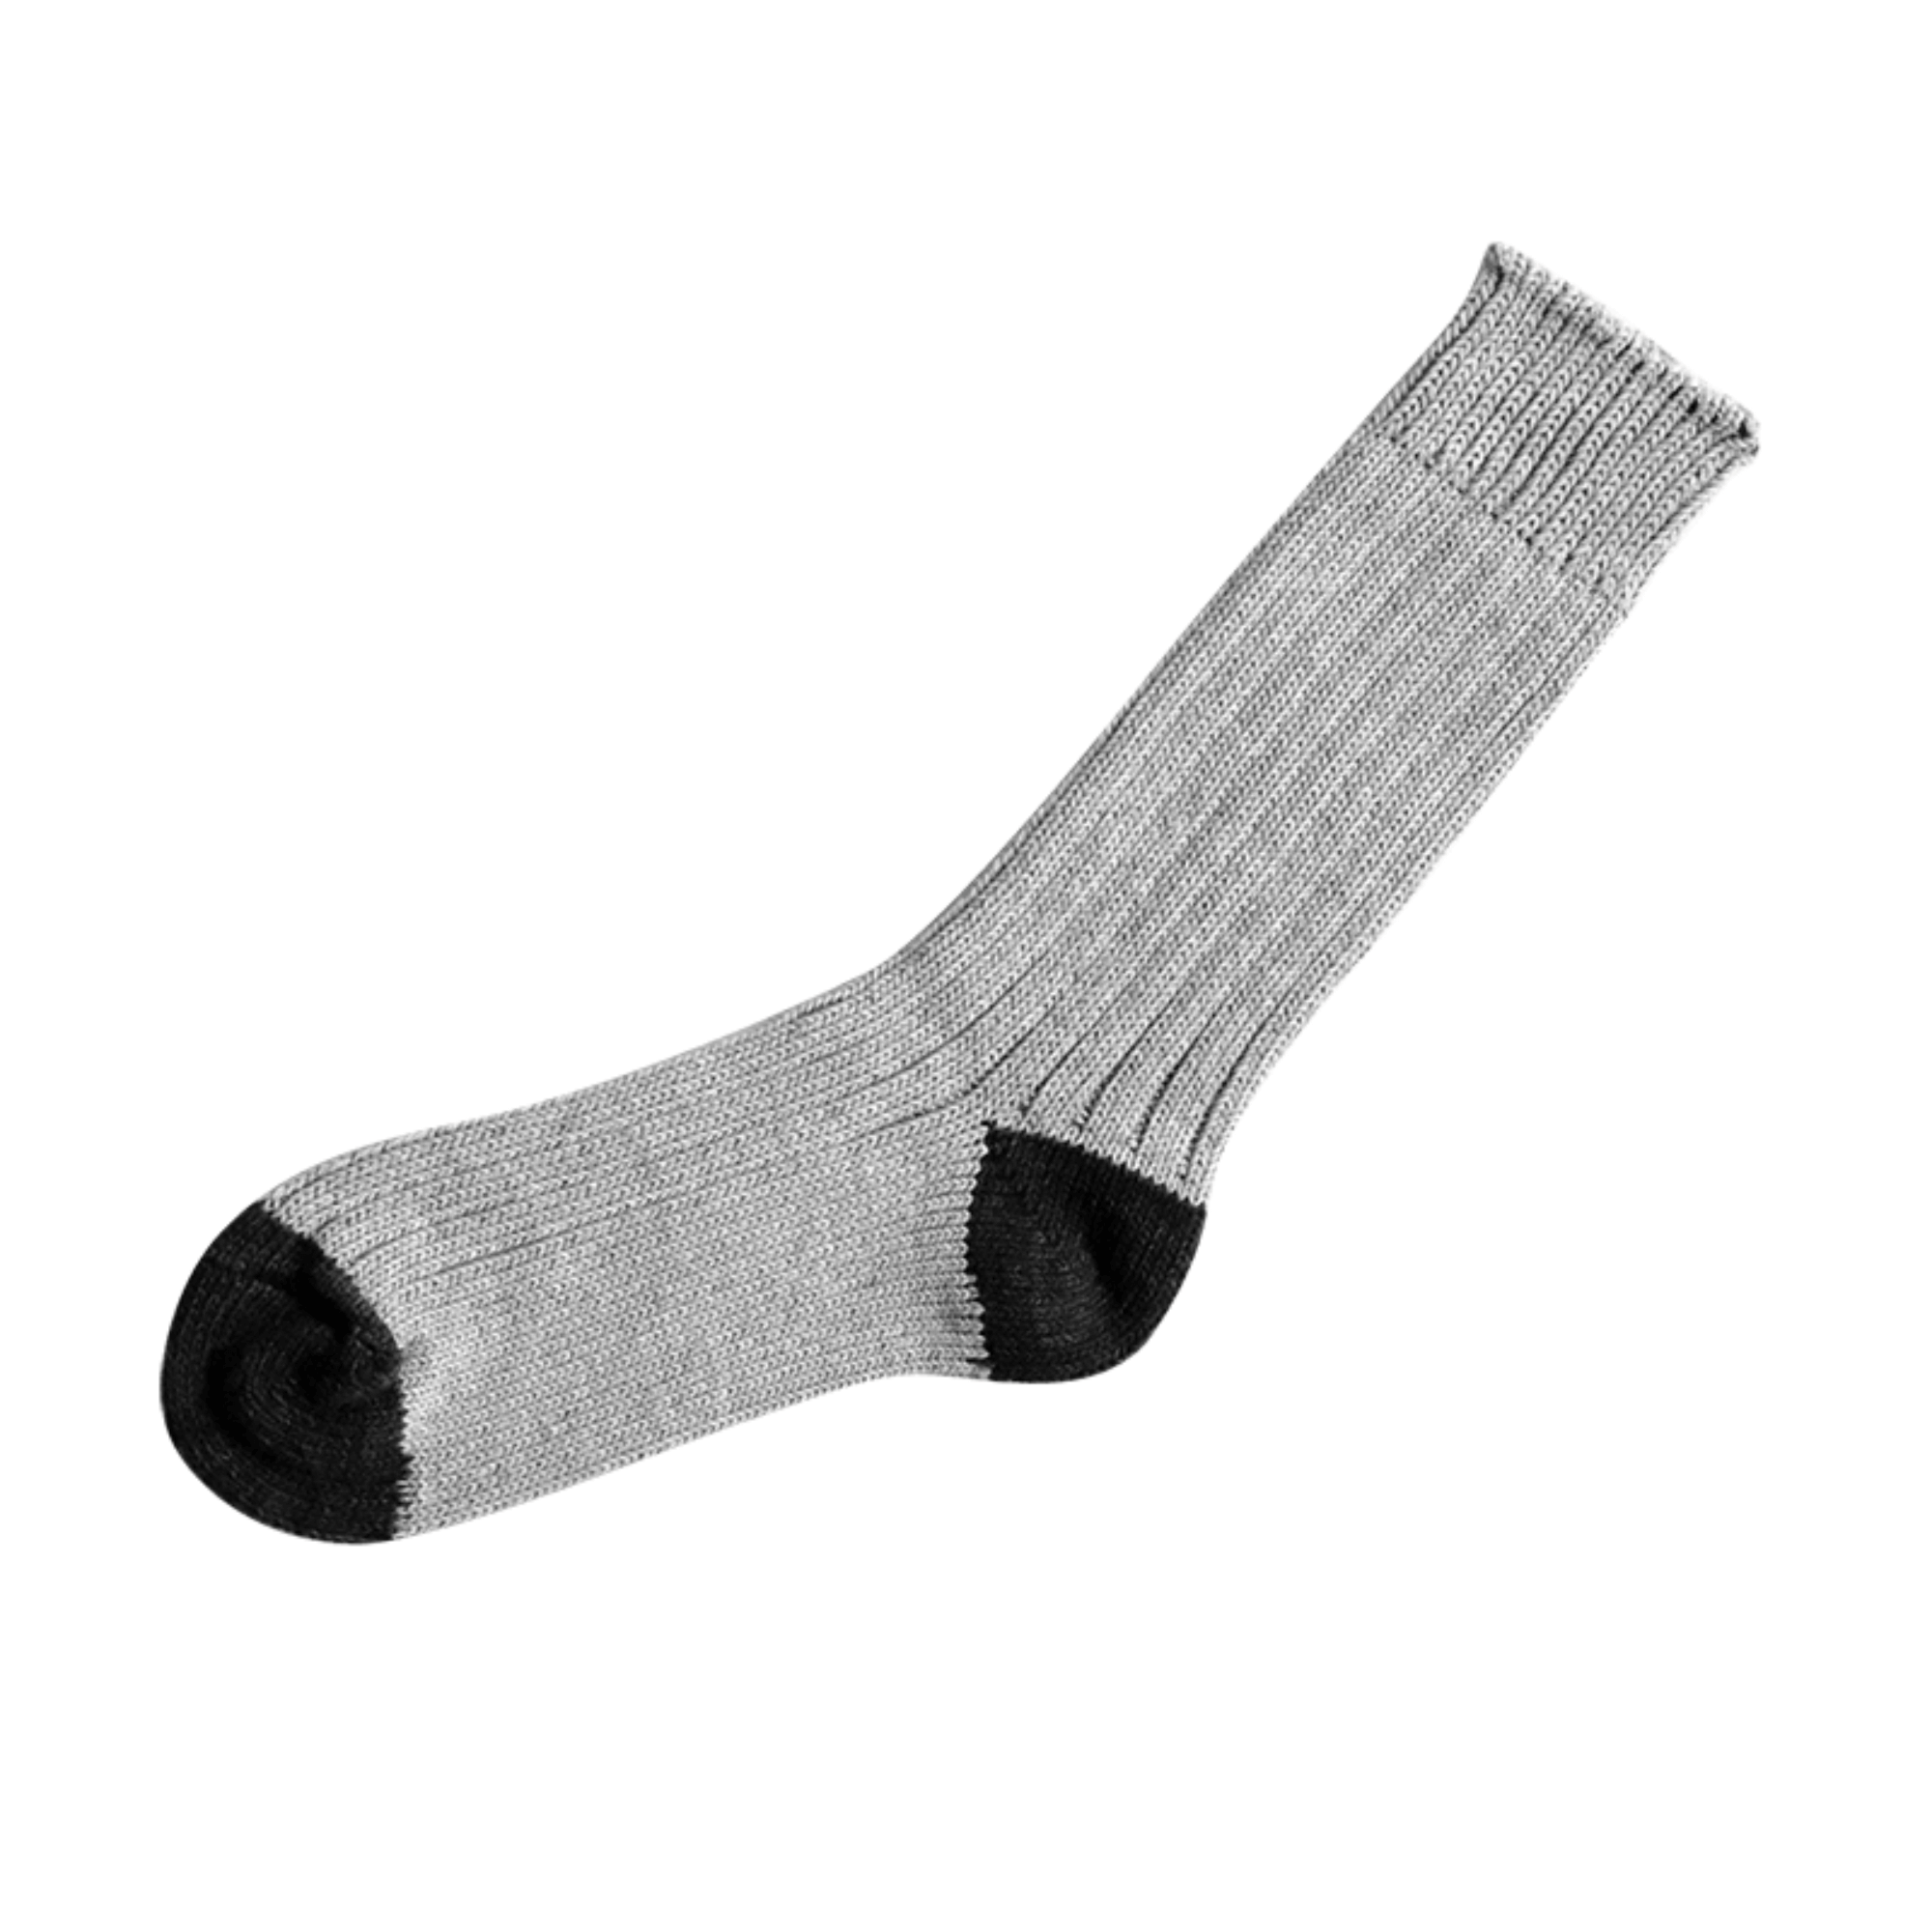 NISHIGUCHI KUTSUSHITA boston cotton socks with contrast tow and heel